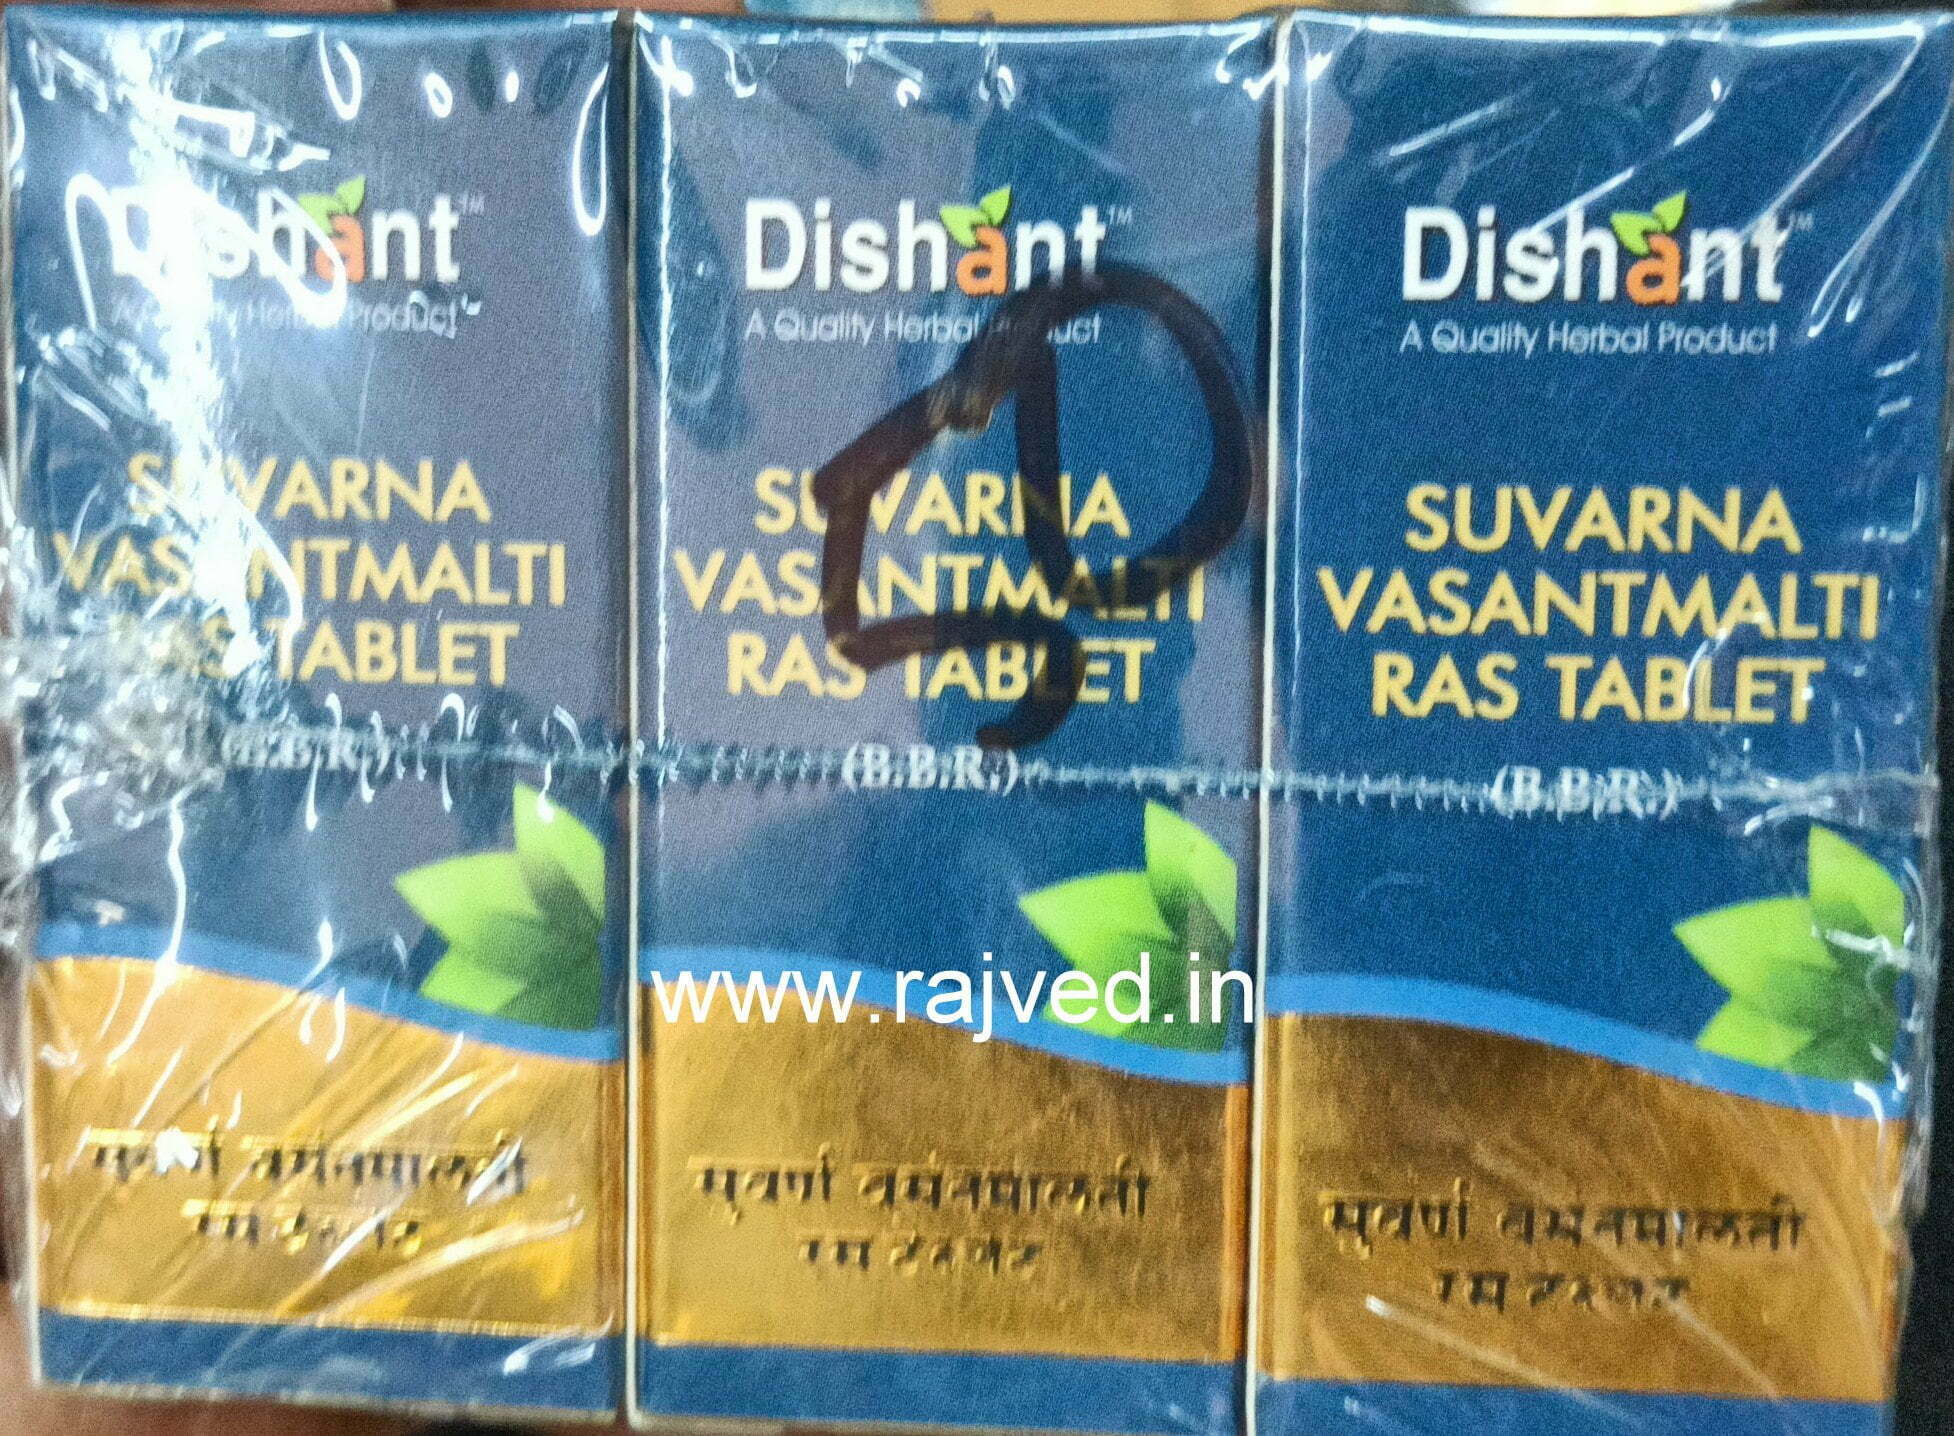 suvarna vasantmalti ras tablets gold 50tab upto 20% off dishant ayurvedic suppliers